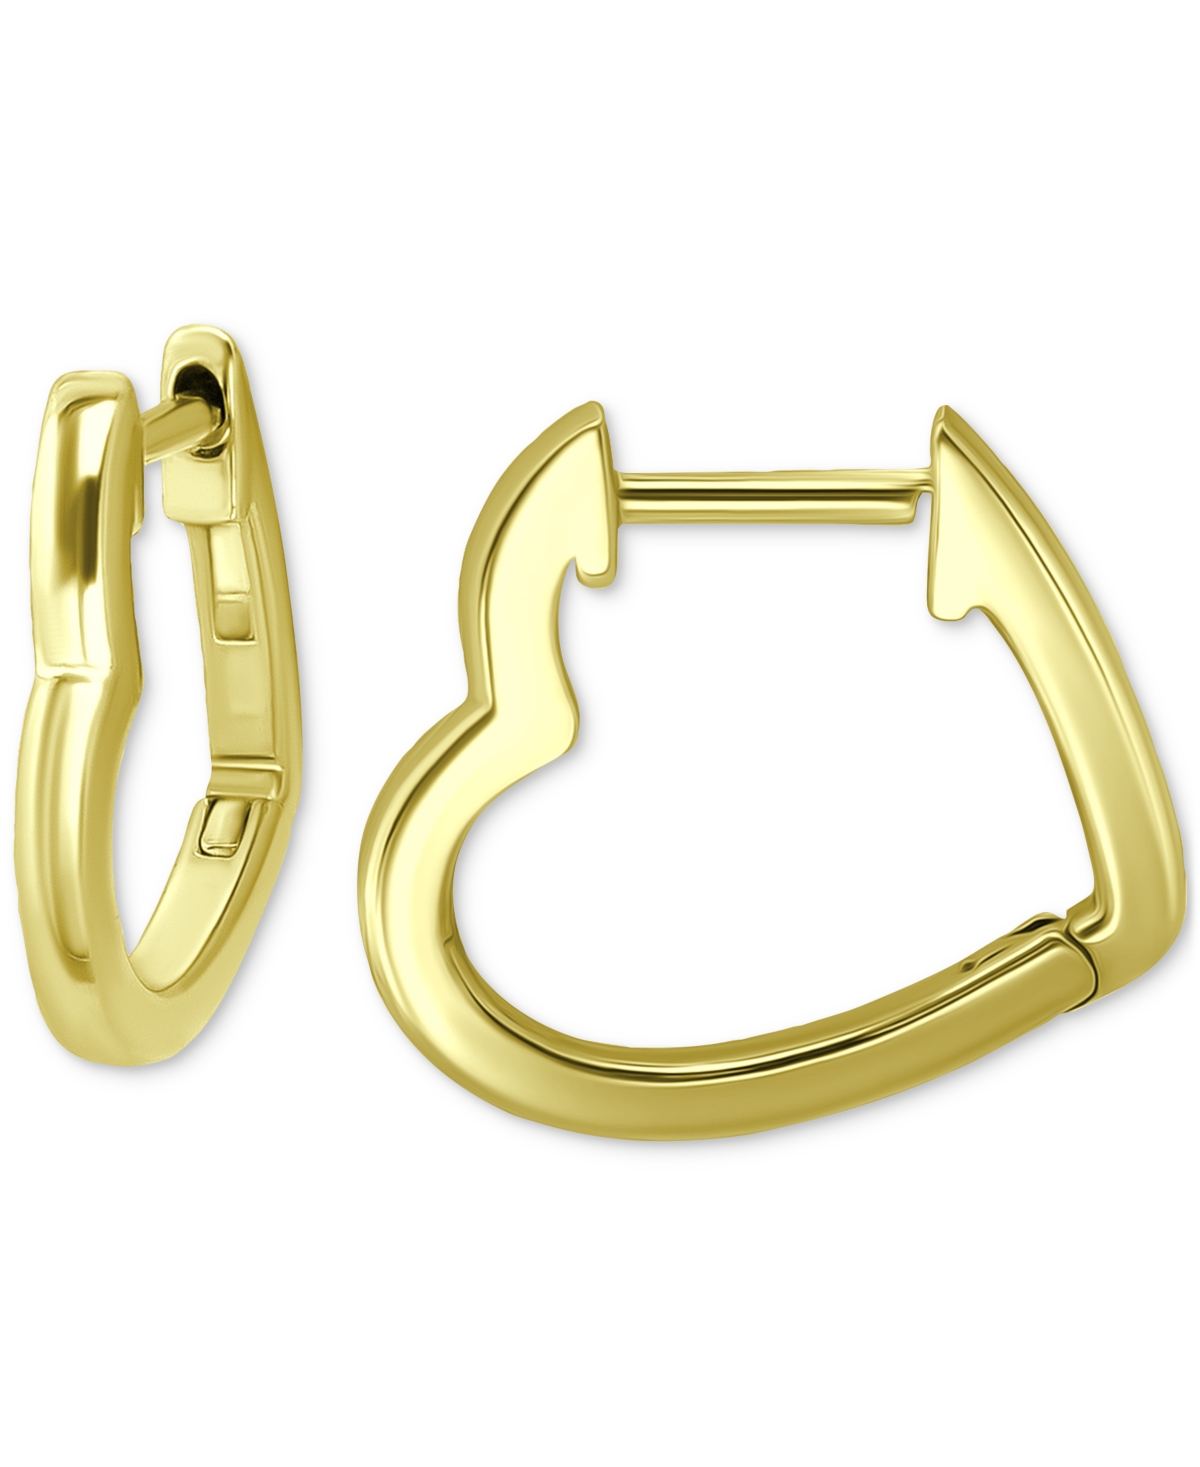 Giani Bernini Heart Huggie Hoop Earrings, Xmm, Created For Macy's In Gold Over Silver